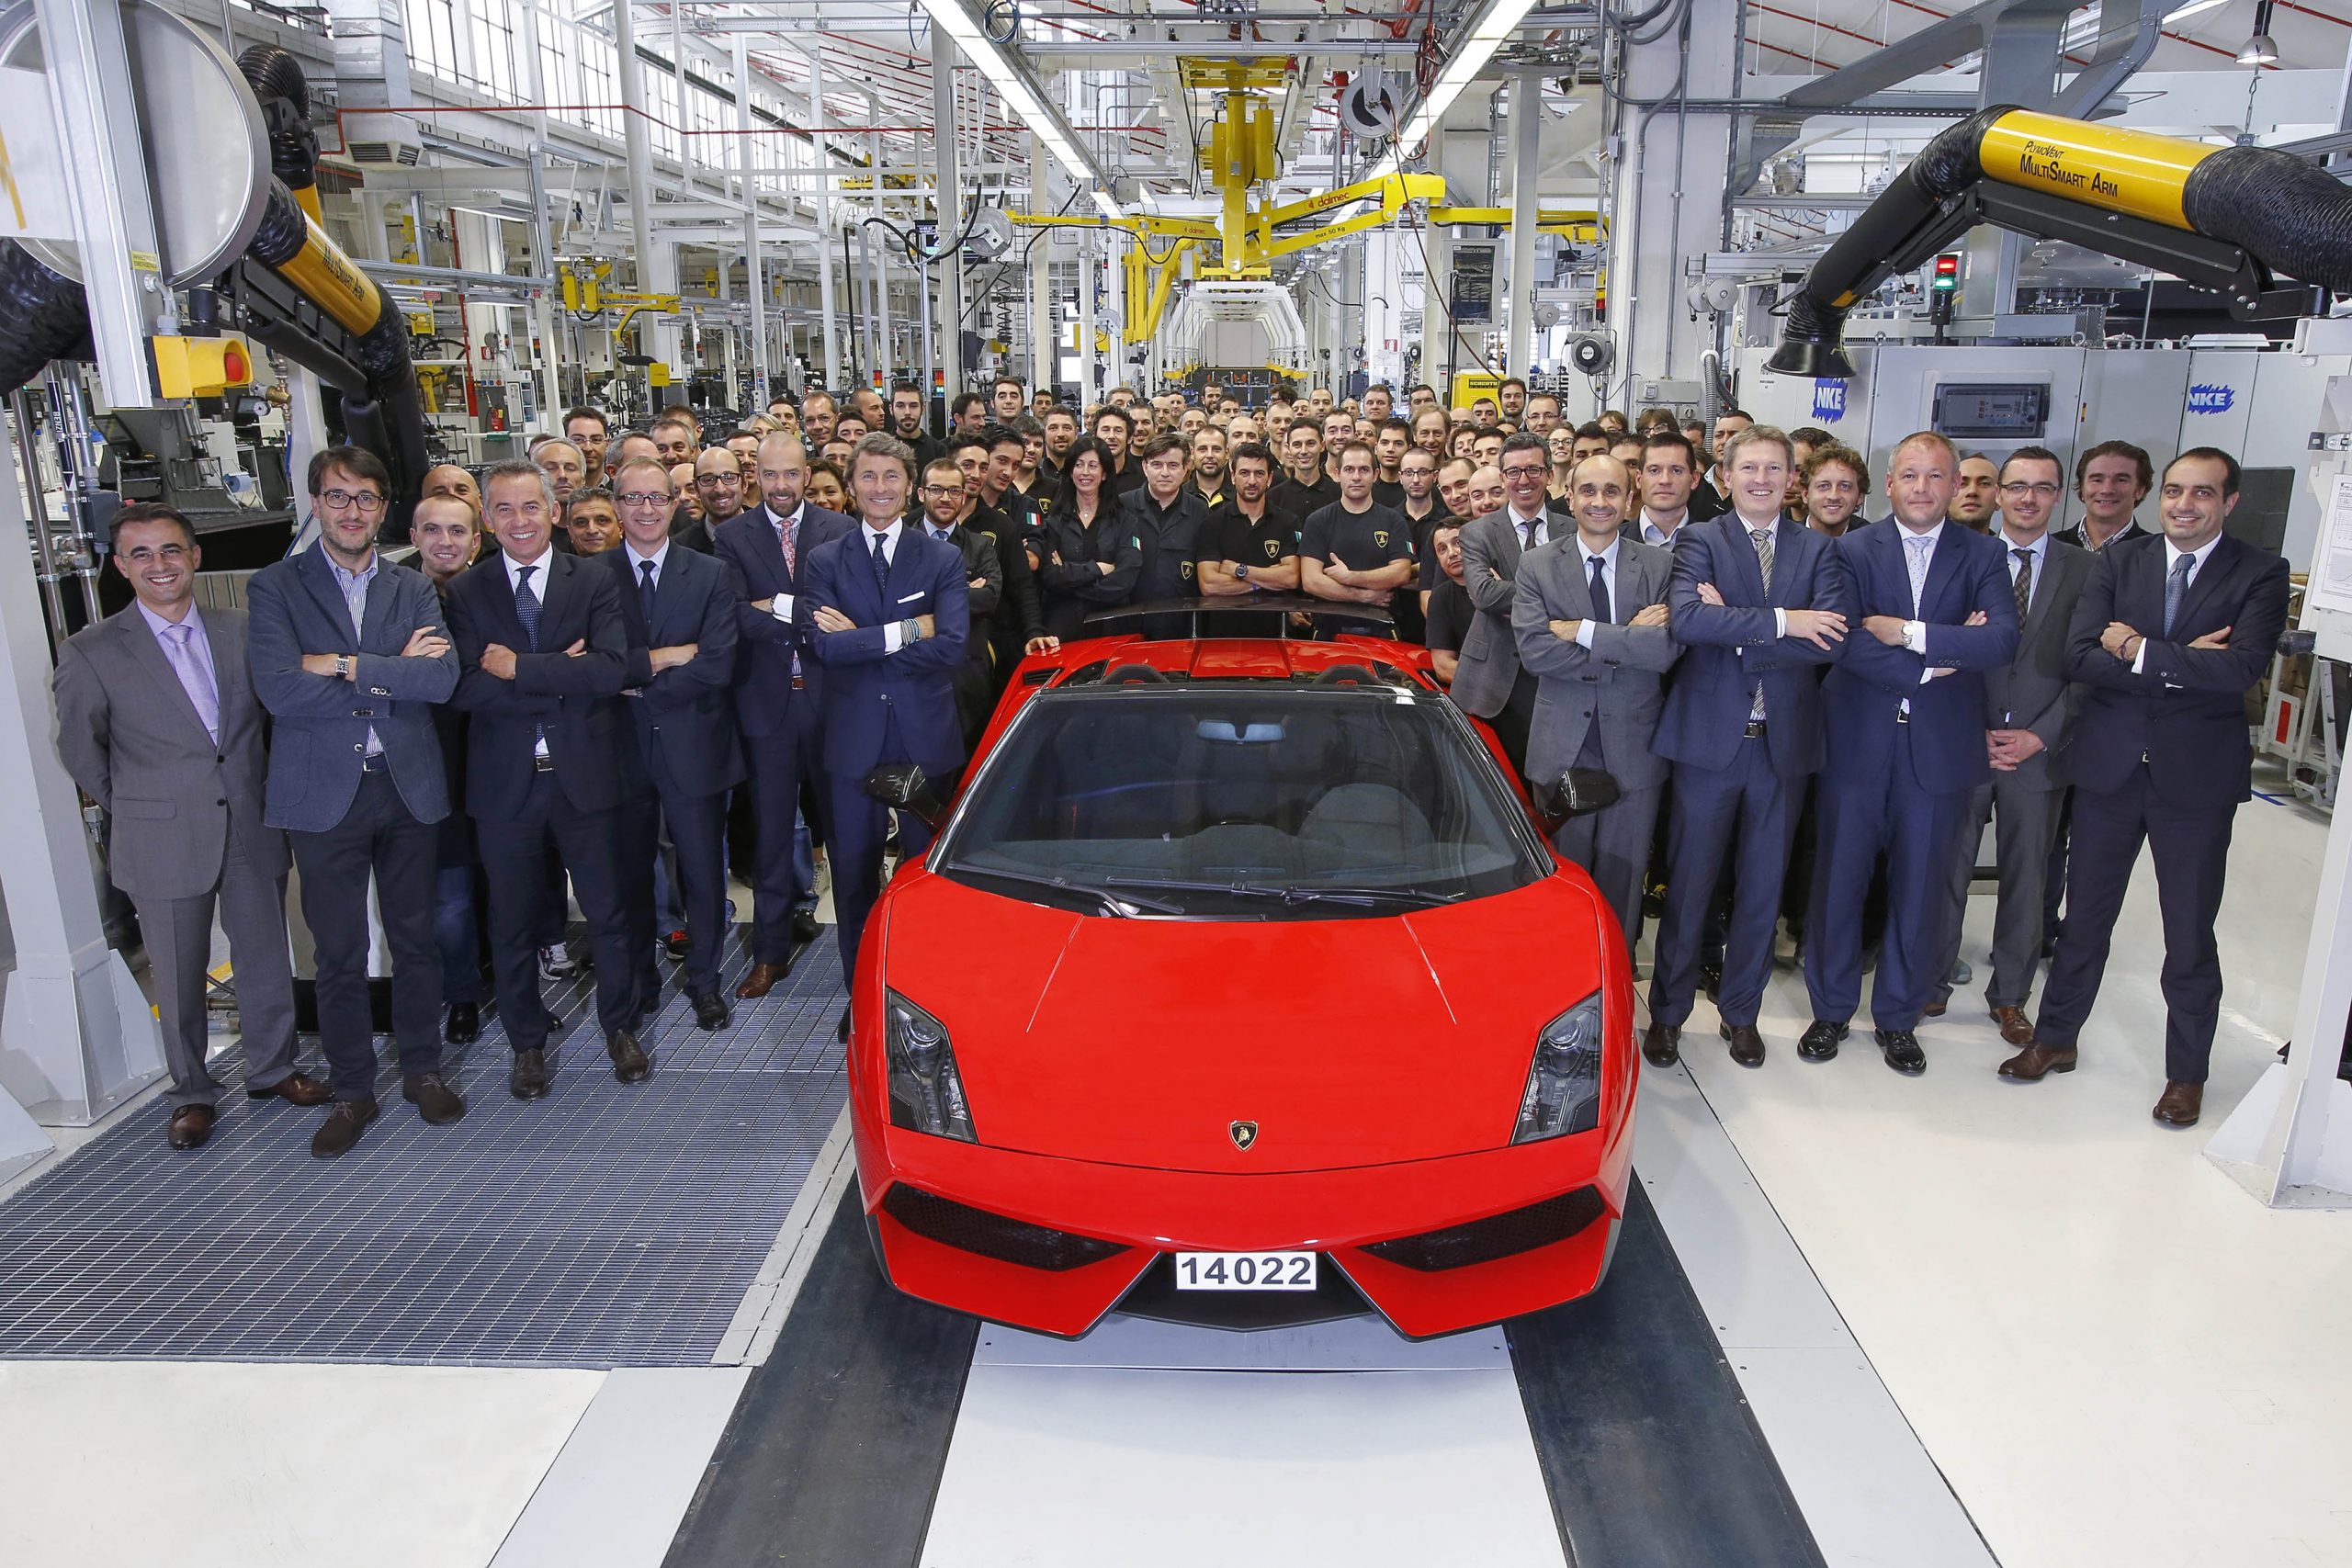 Lamborghini Gallardo despede-se com recorde